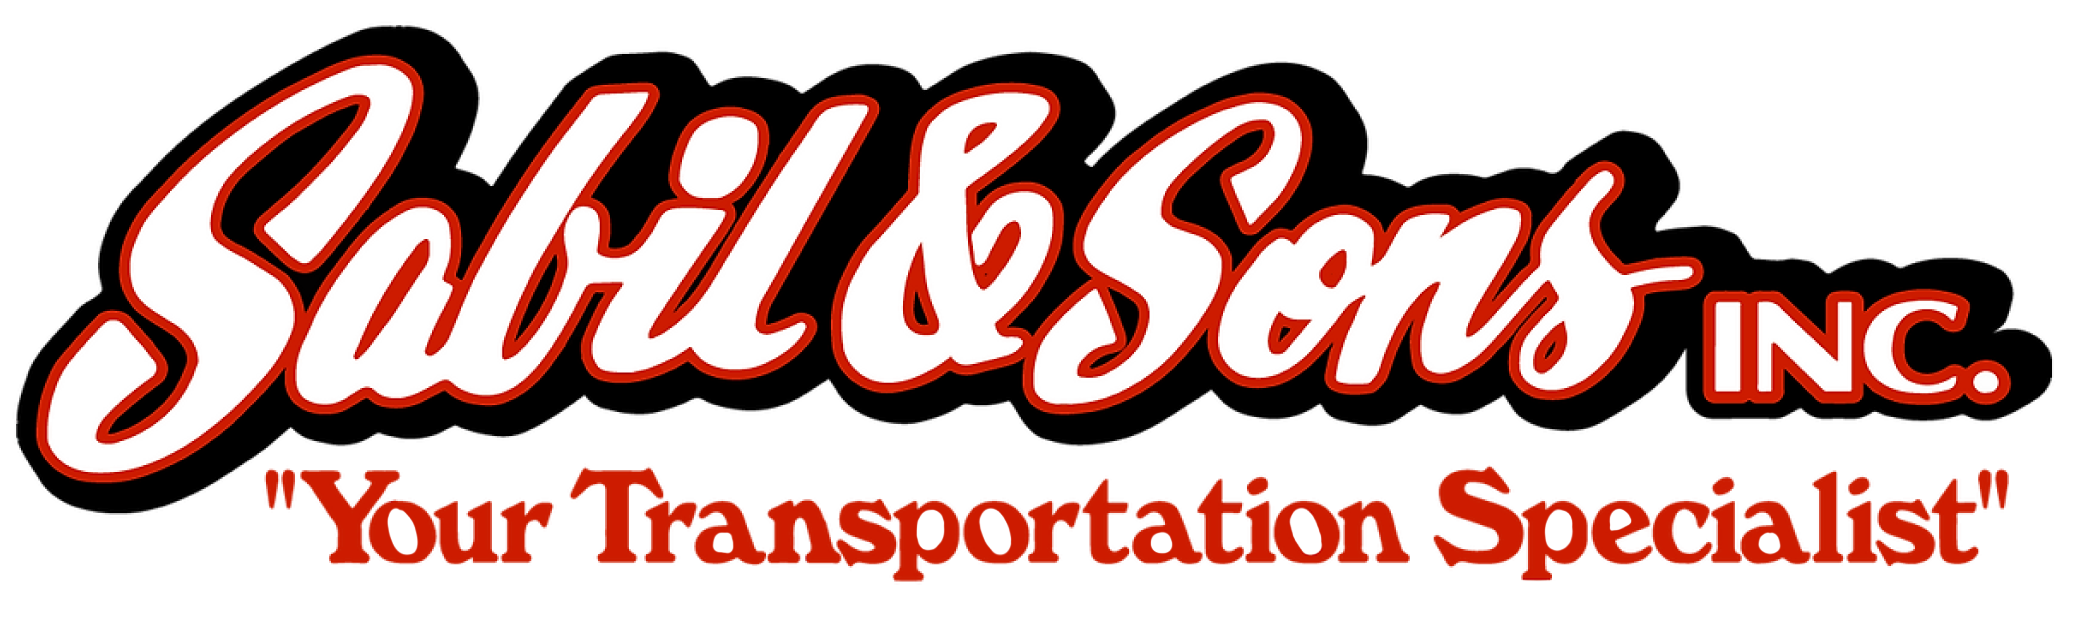 Sabil & Sons inc. "Your Transportation Specialist"